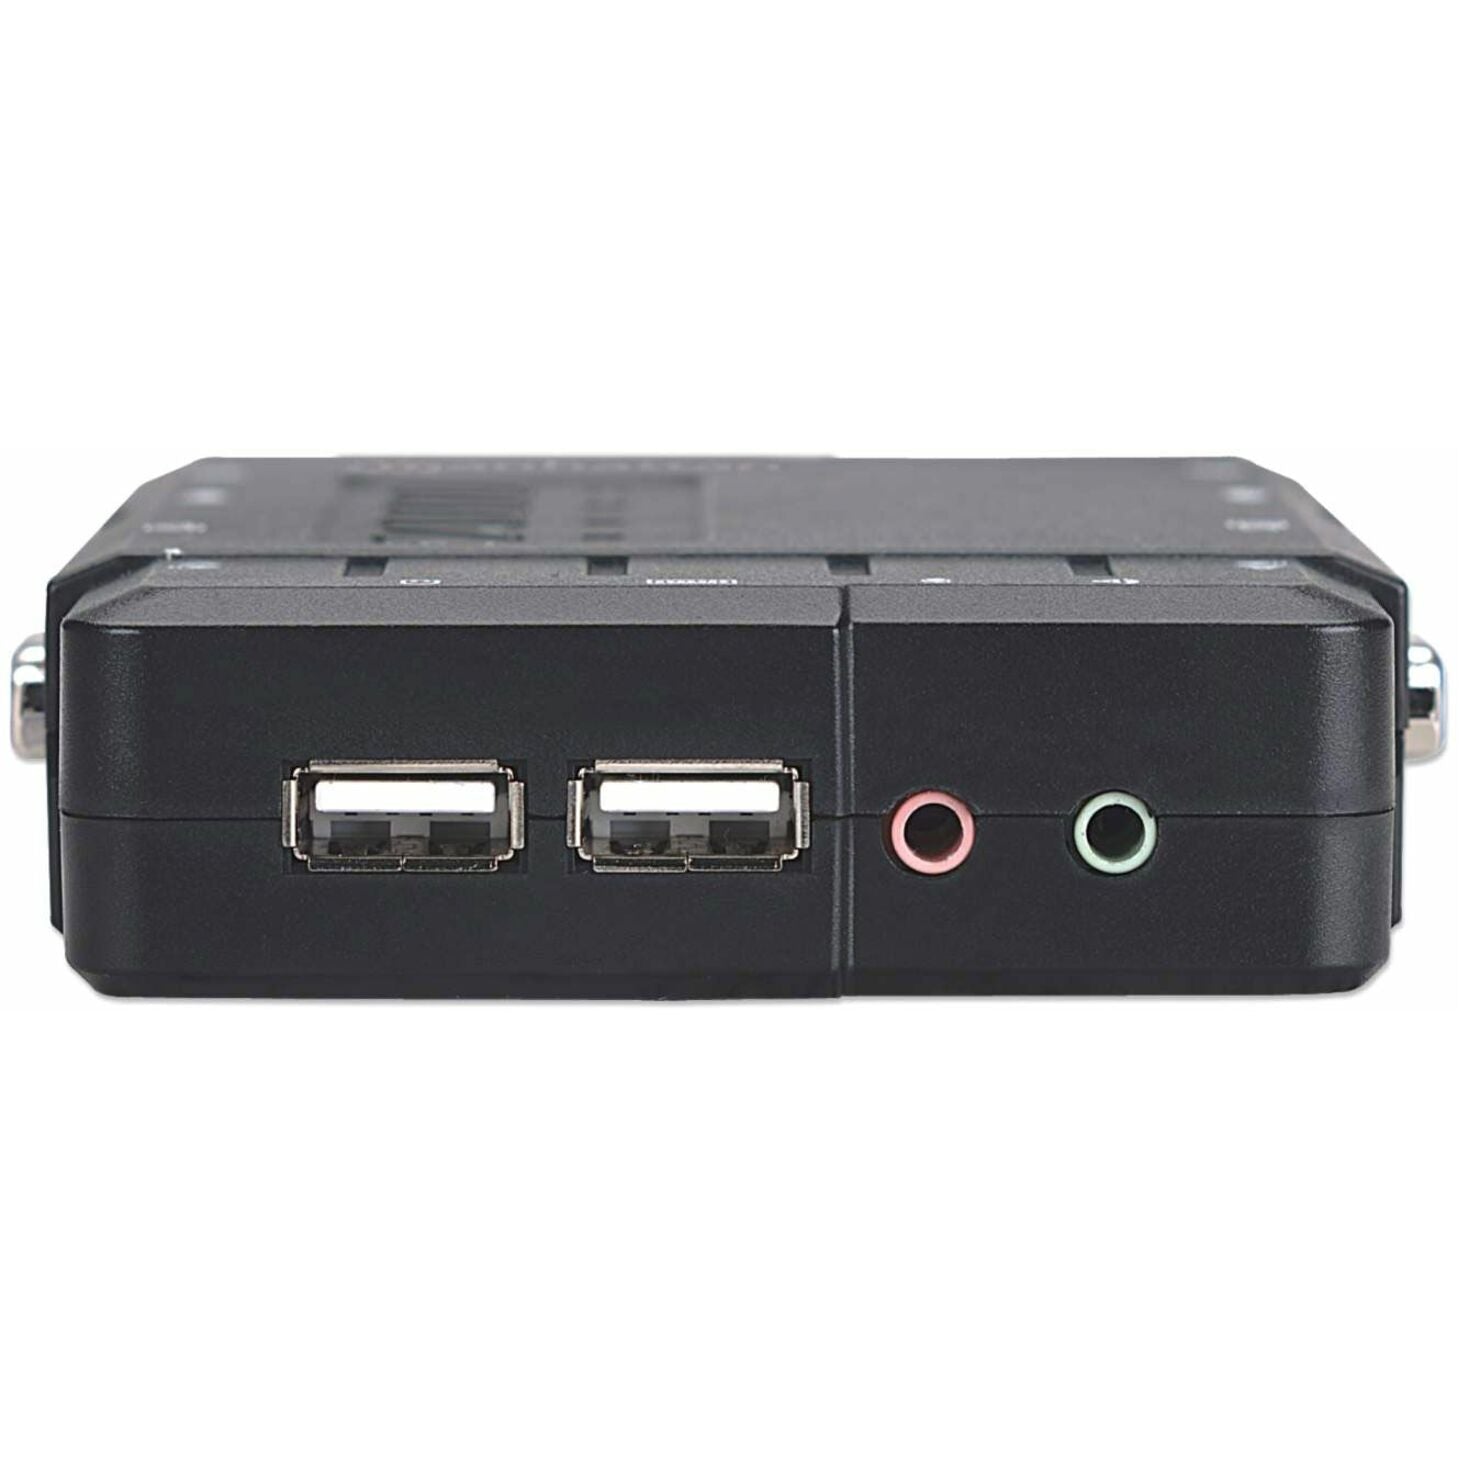 Manhattan 151269 4-Port Compact KVM Switch, USB/VGA, 6 USB Ports, 4 VGA Ports